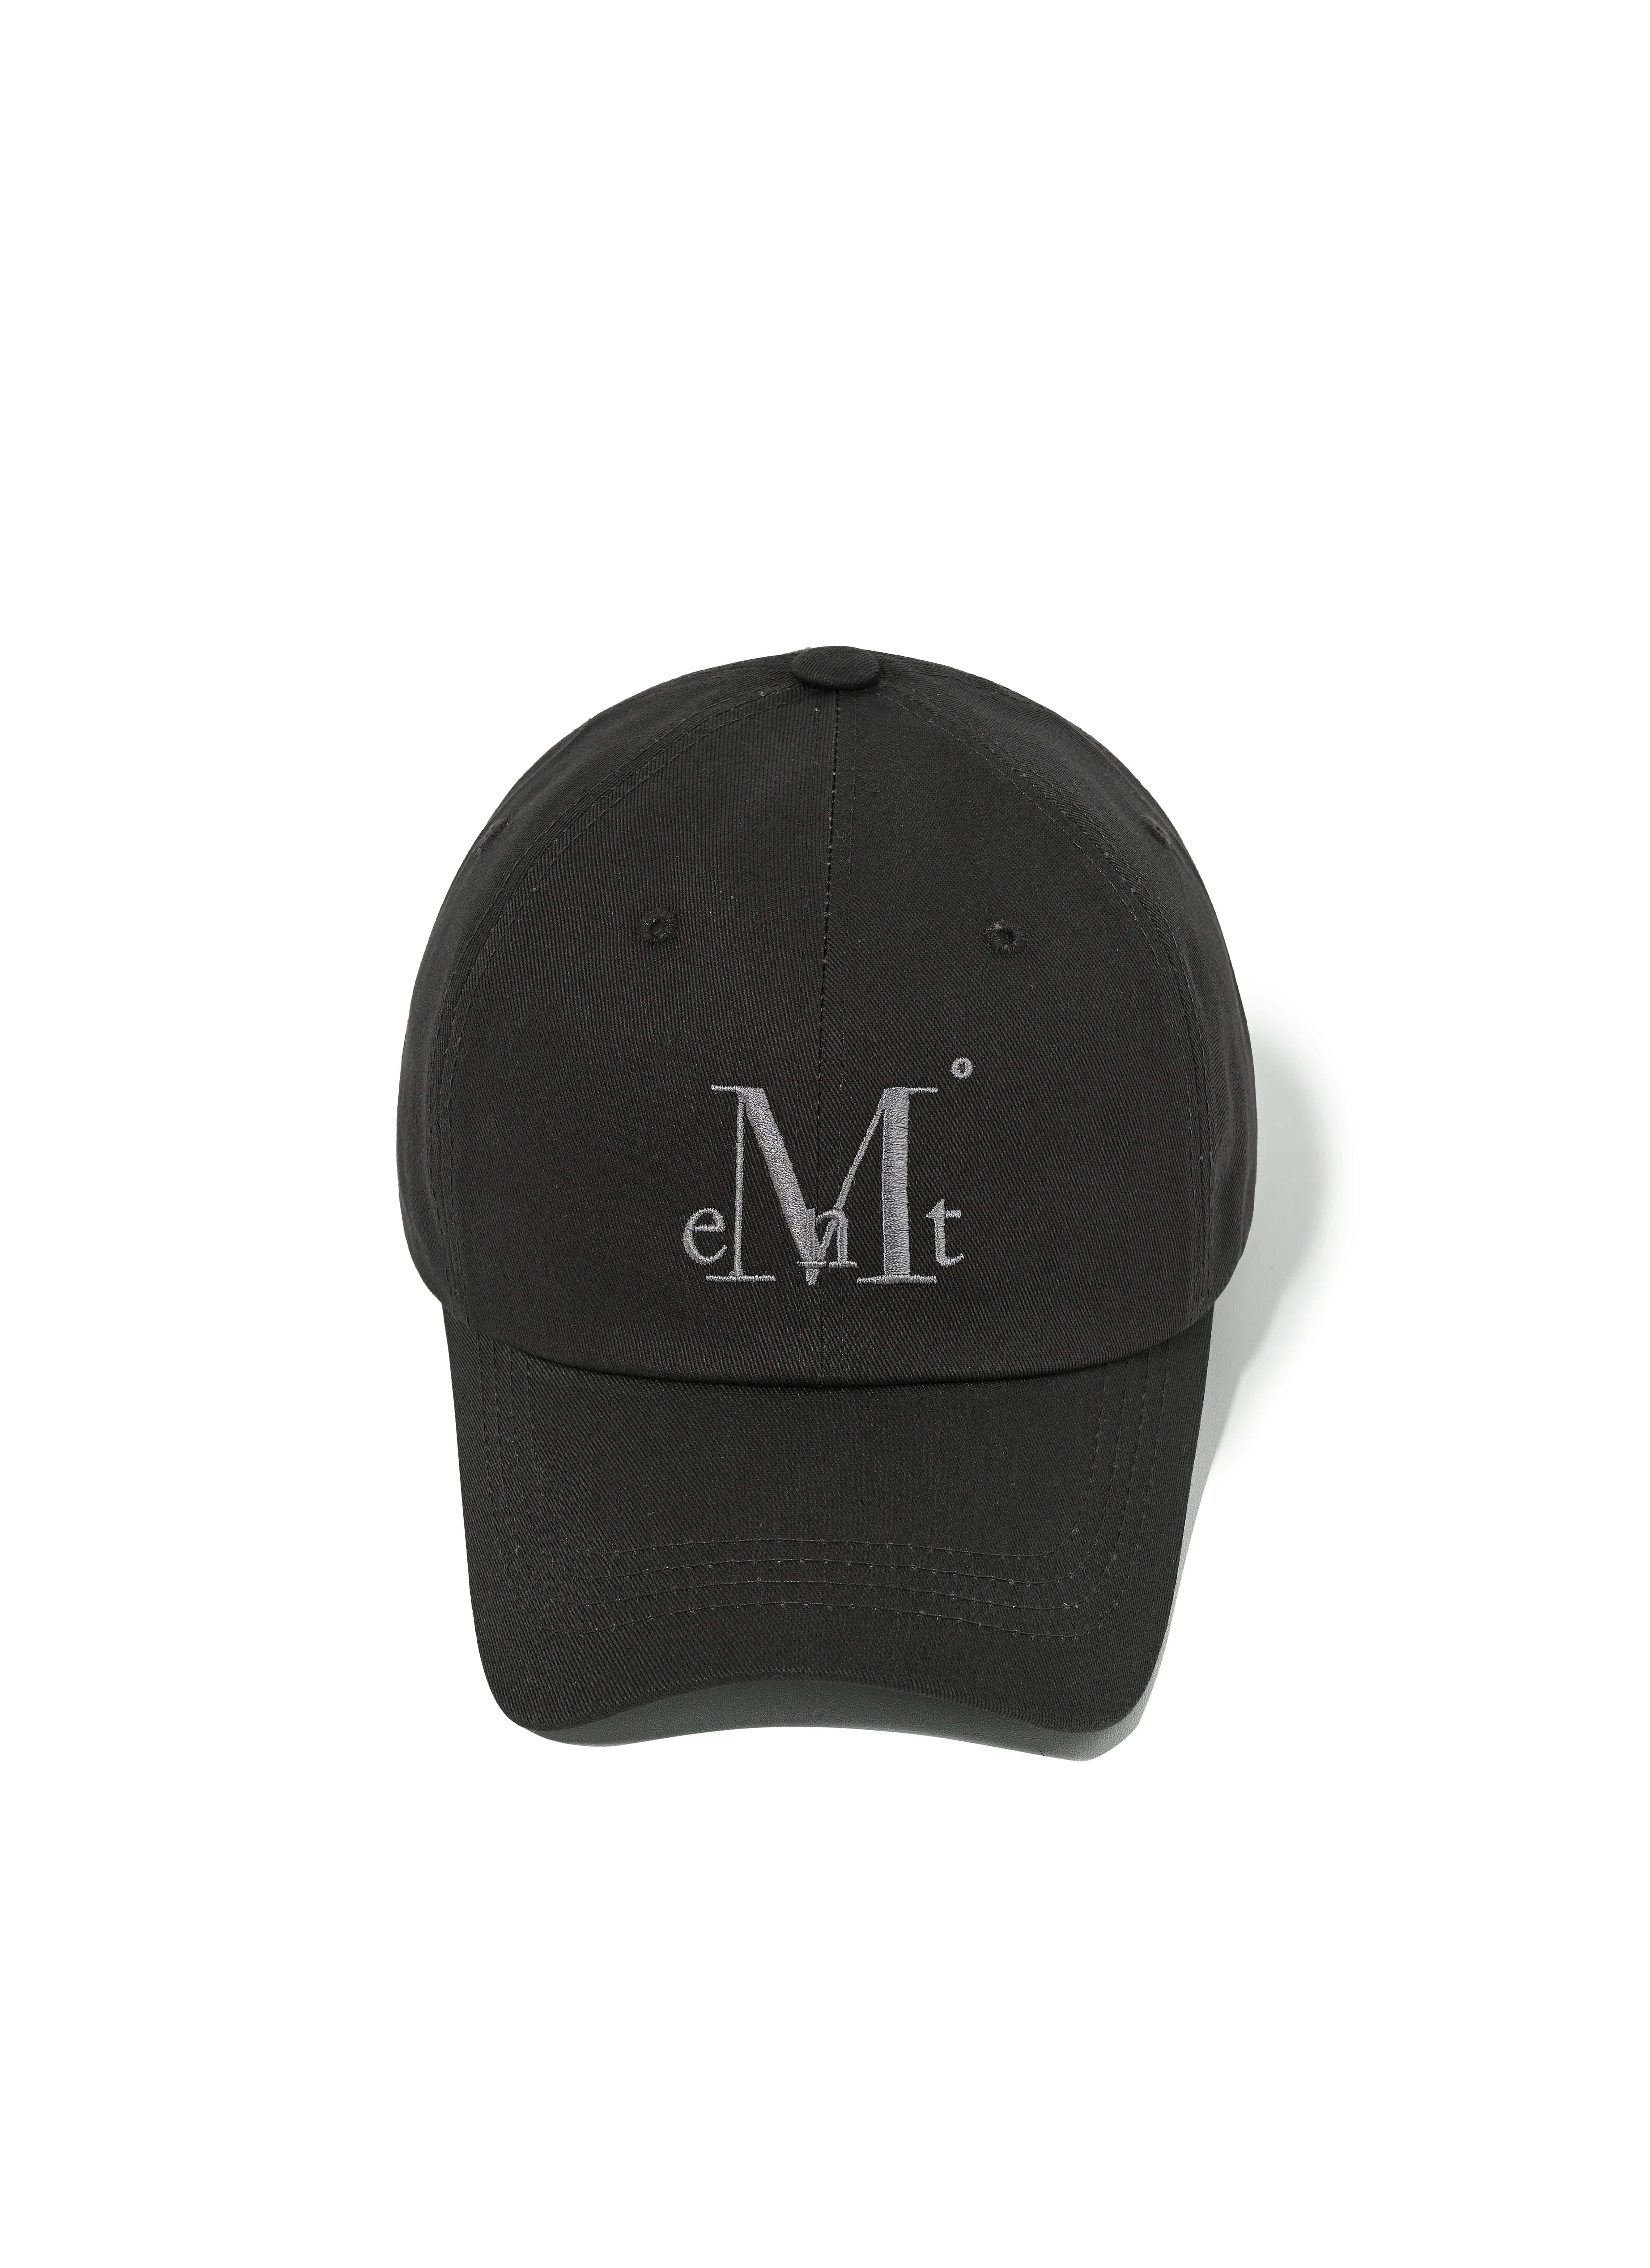 MUCENT BALL CAP - 무센트 볼캡 (Charcoal)